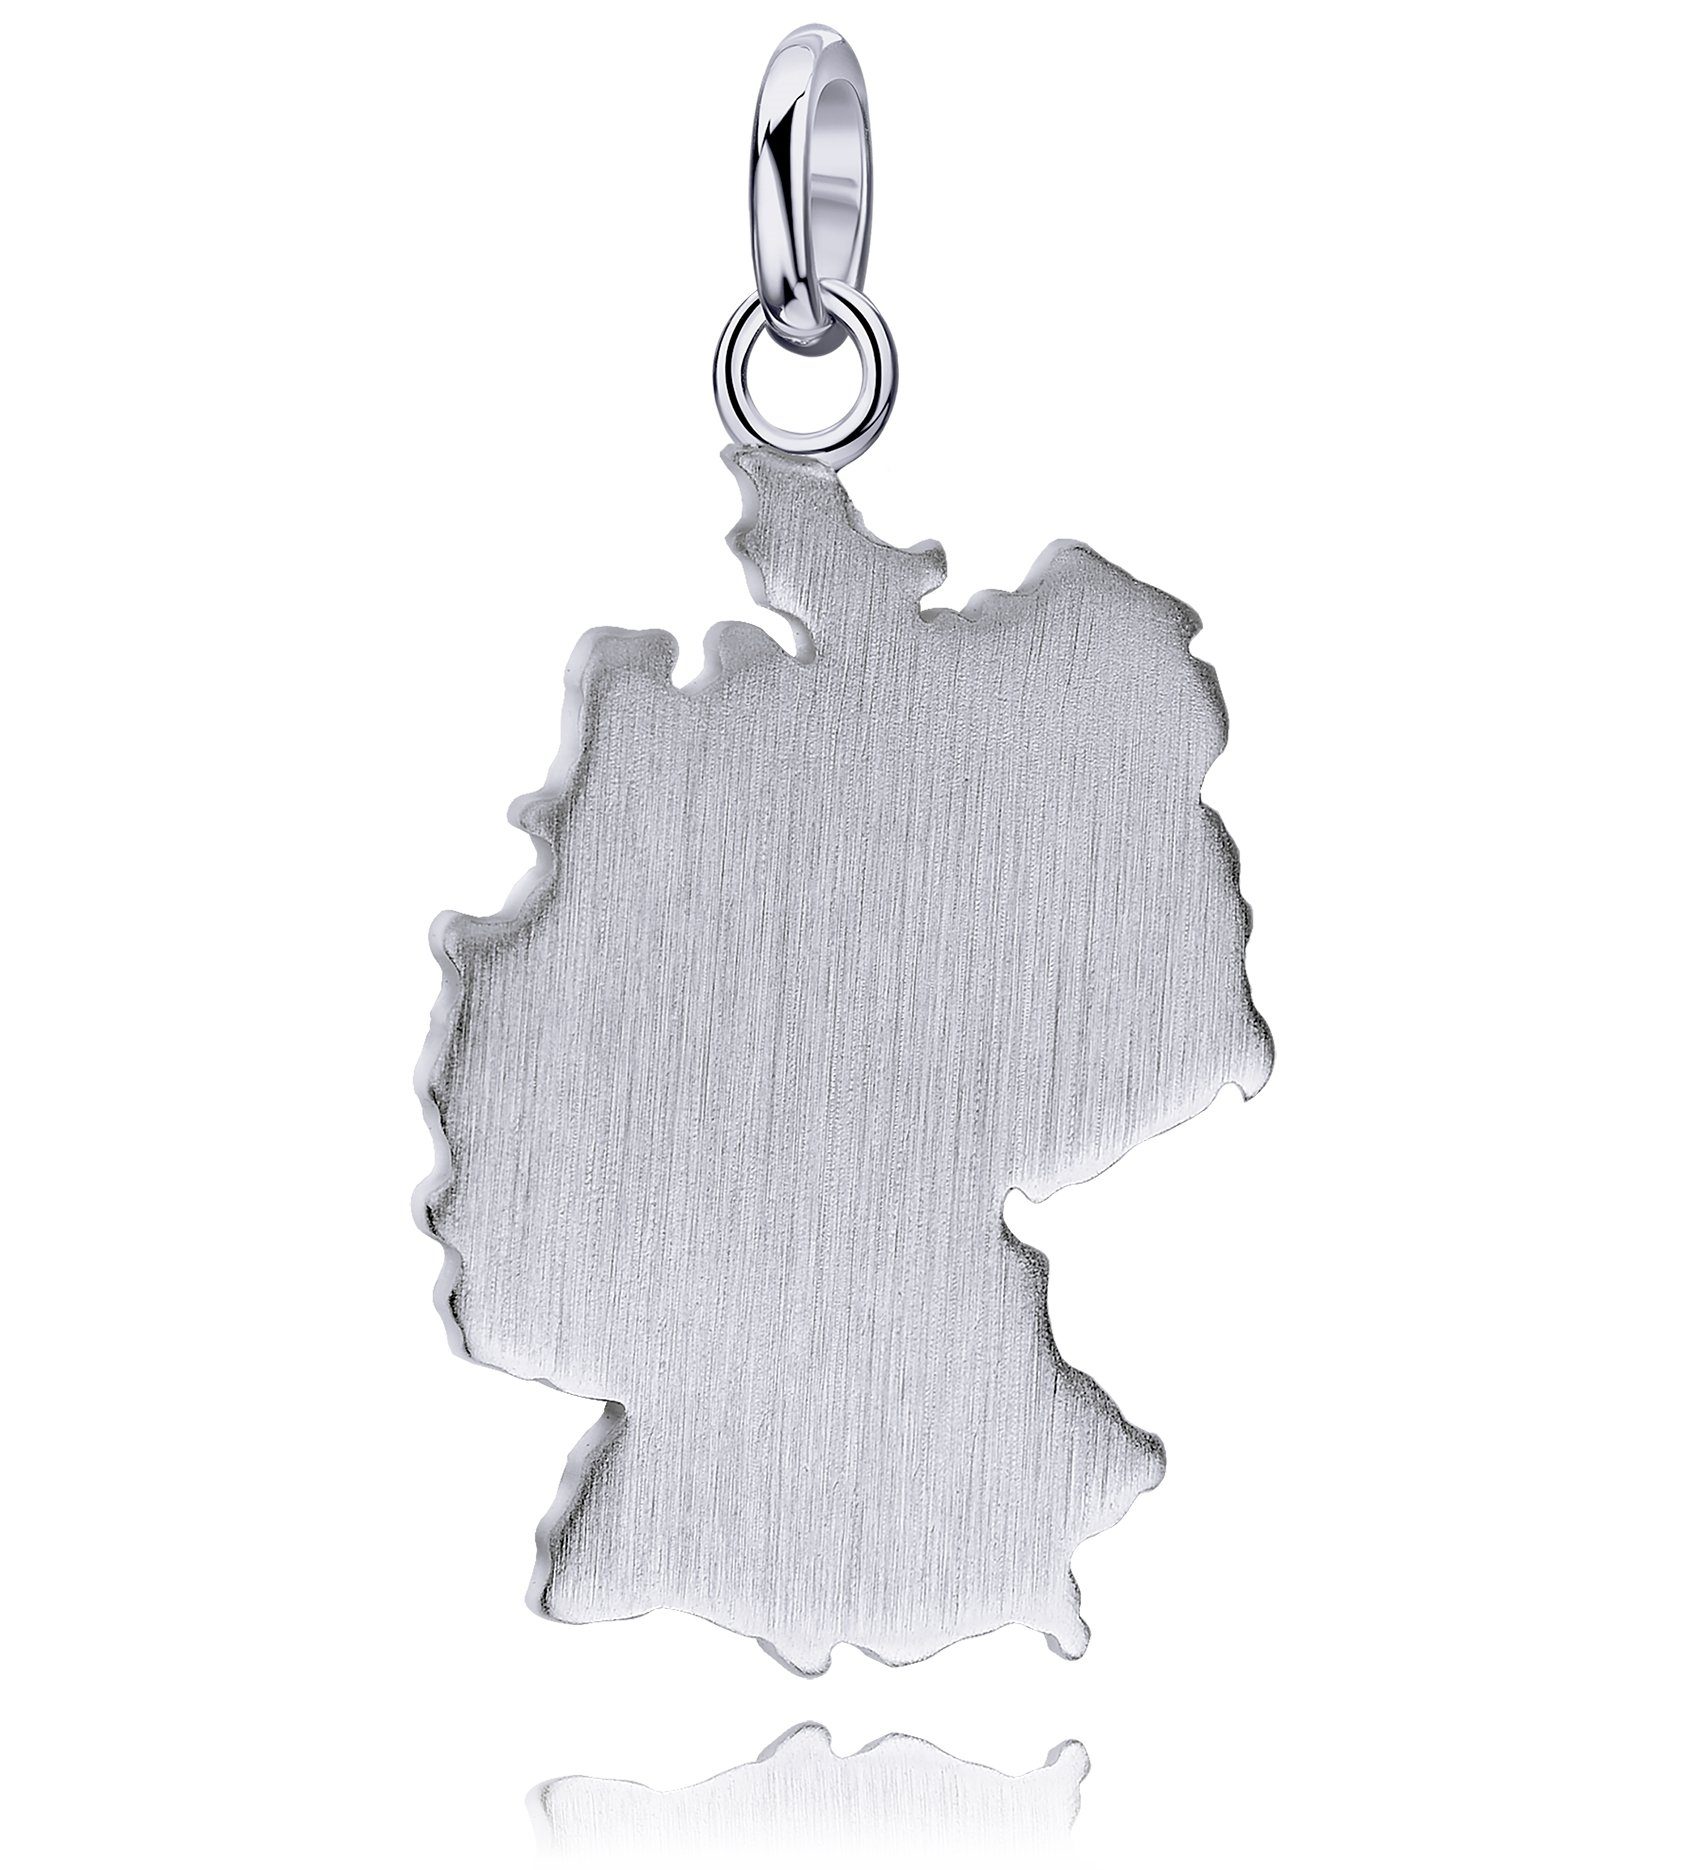 JEVELION Kettenanhänger Made Silber in - Deutschland Germany Germany, in Anhänger 925 Made Damen), (Silberanhänger für Schmuckanhänger